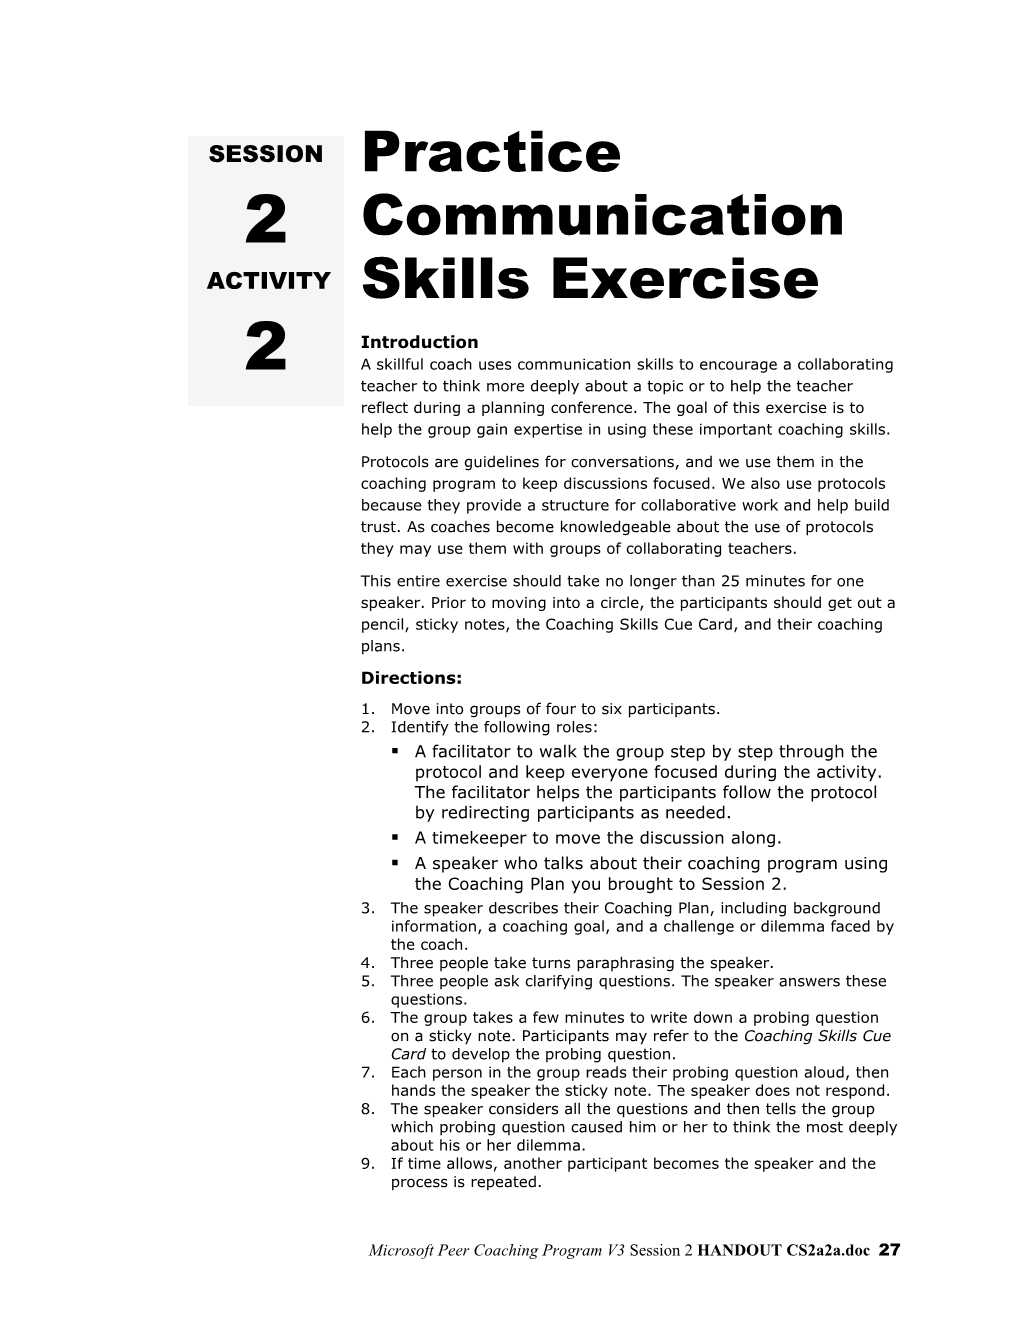 Practice Communication Skills Exercise